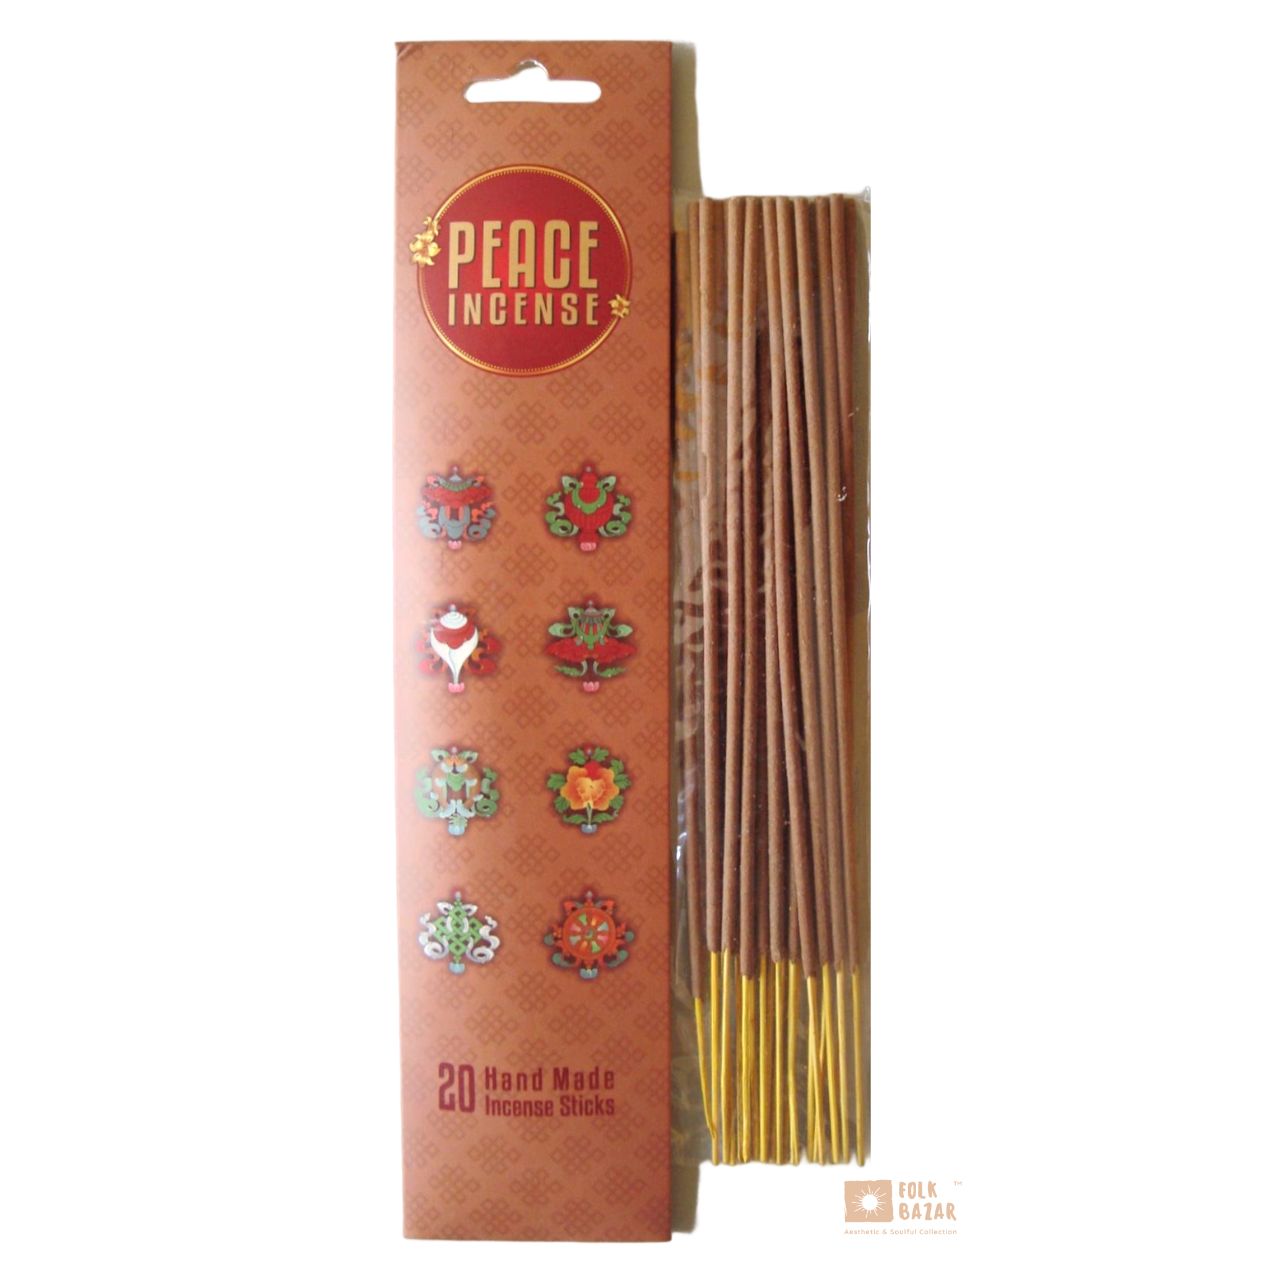 Handmande Peace Incense Sticks (20 sticks per pack)